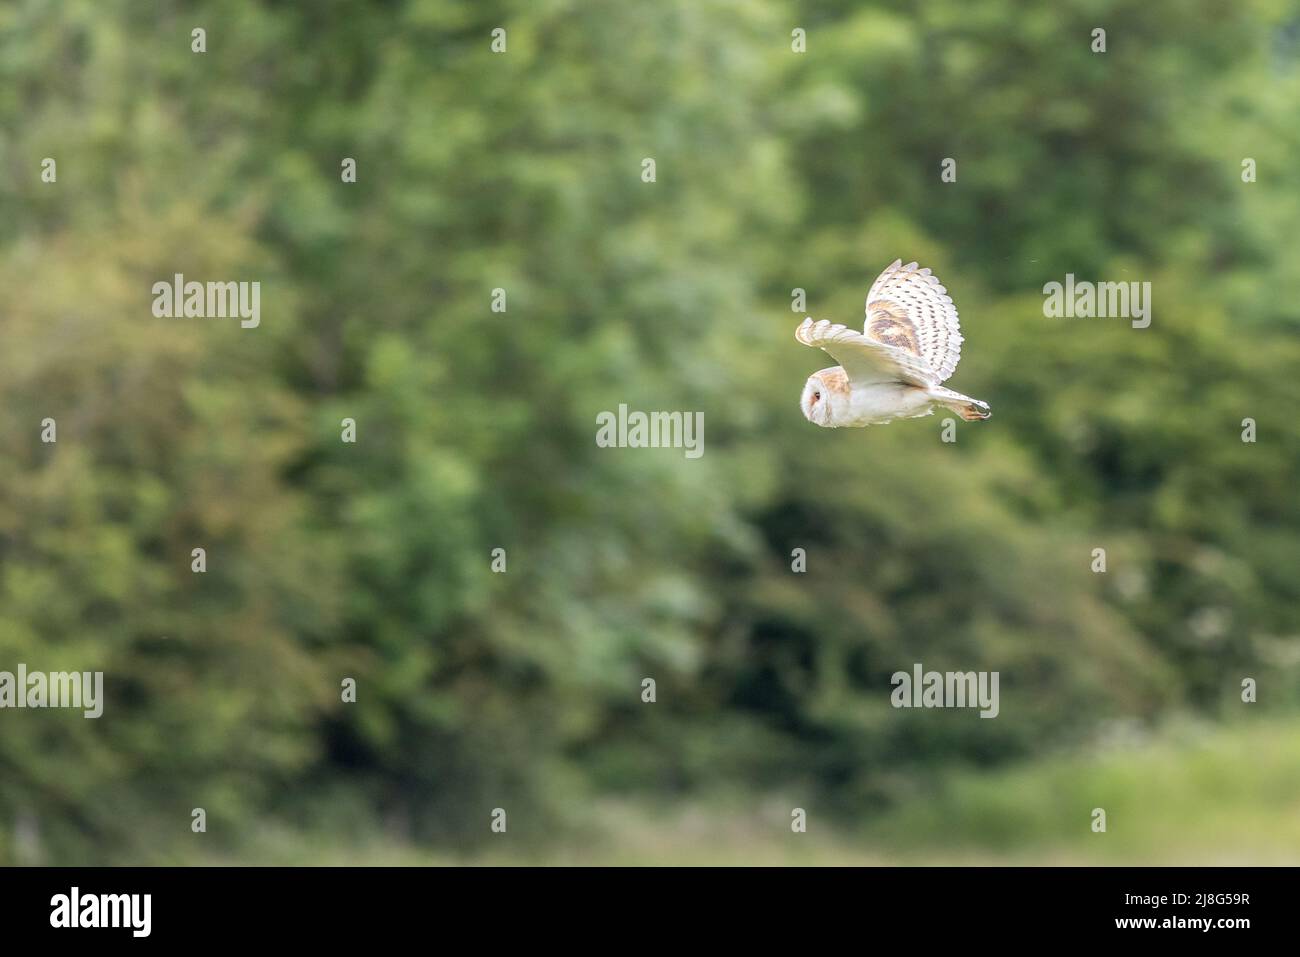 Barn owl (Tyto alba) in flight Stock Photo